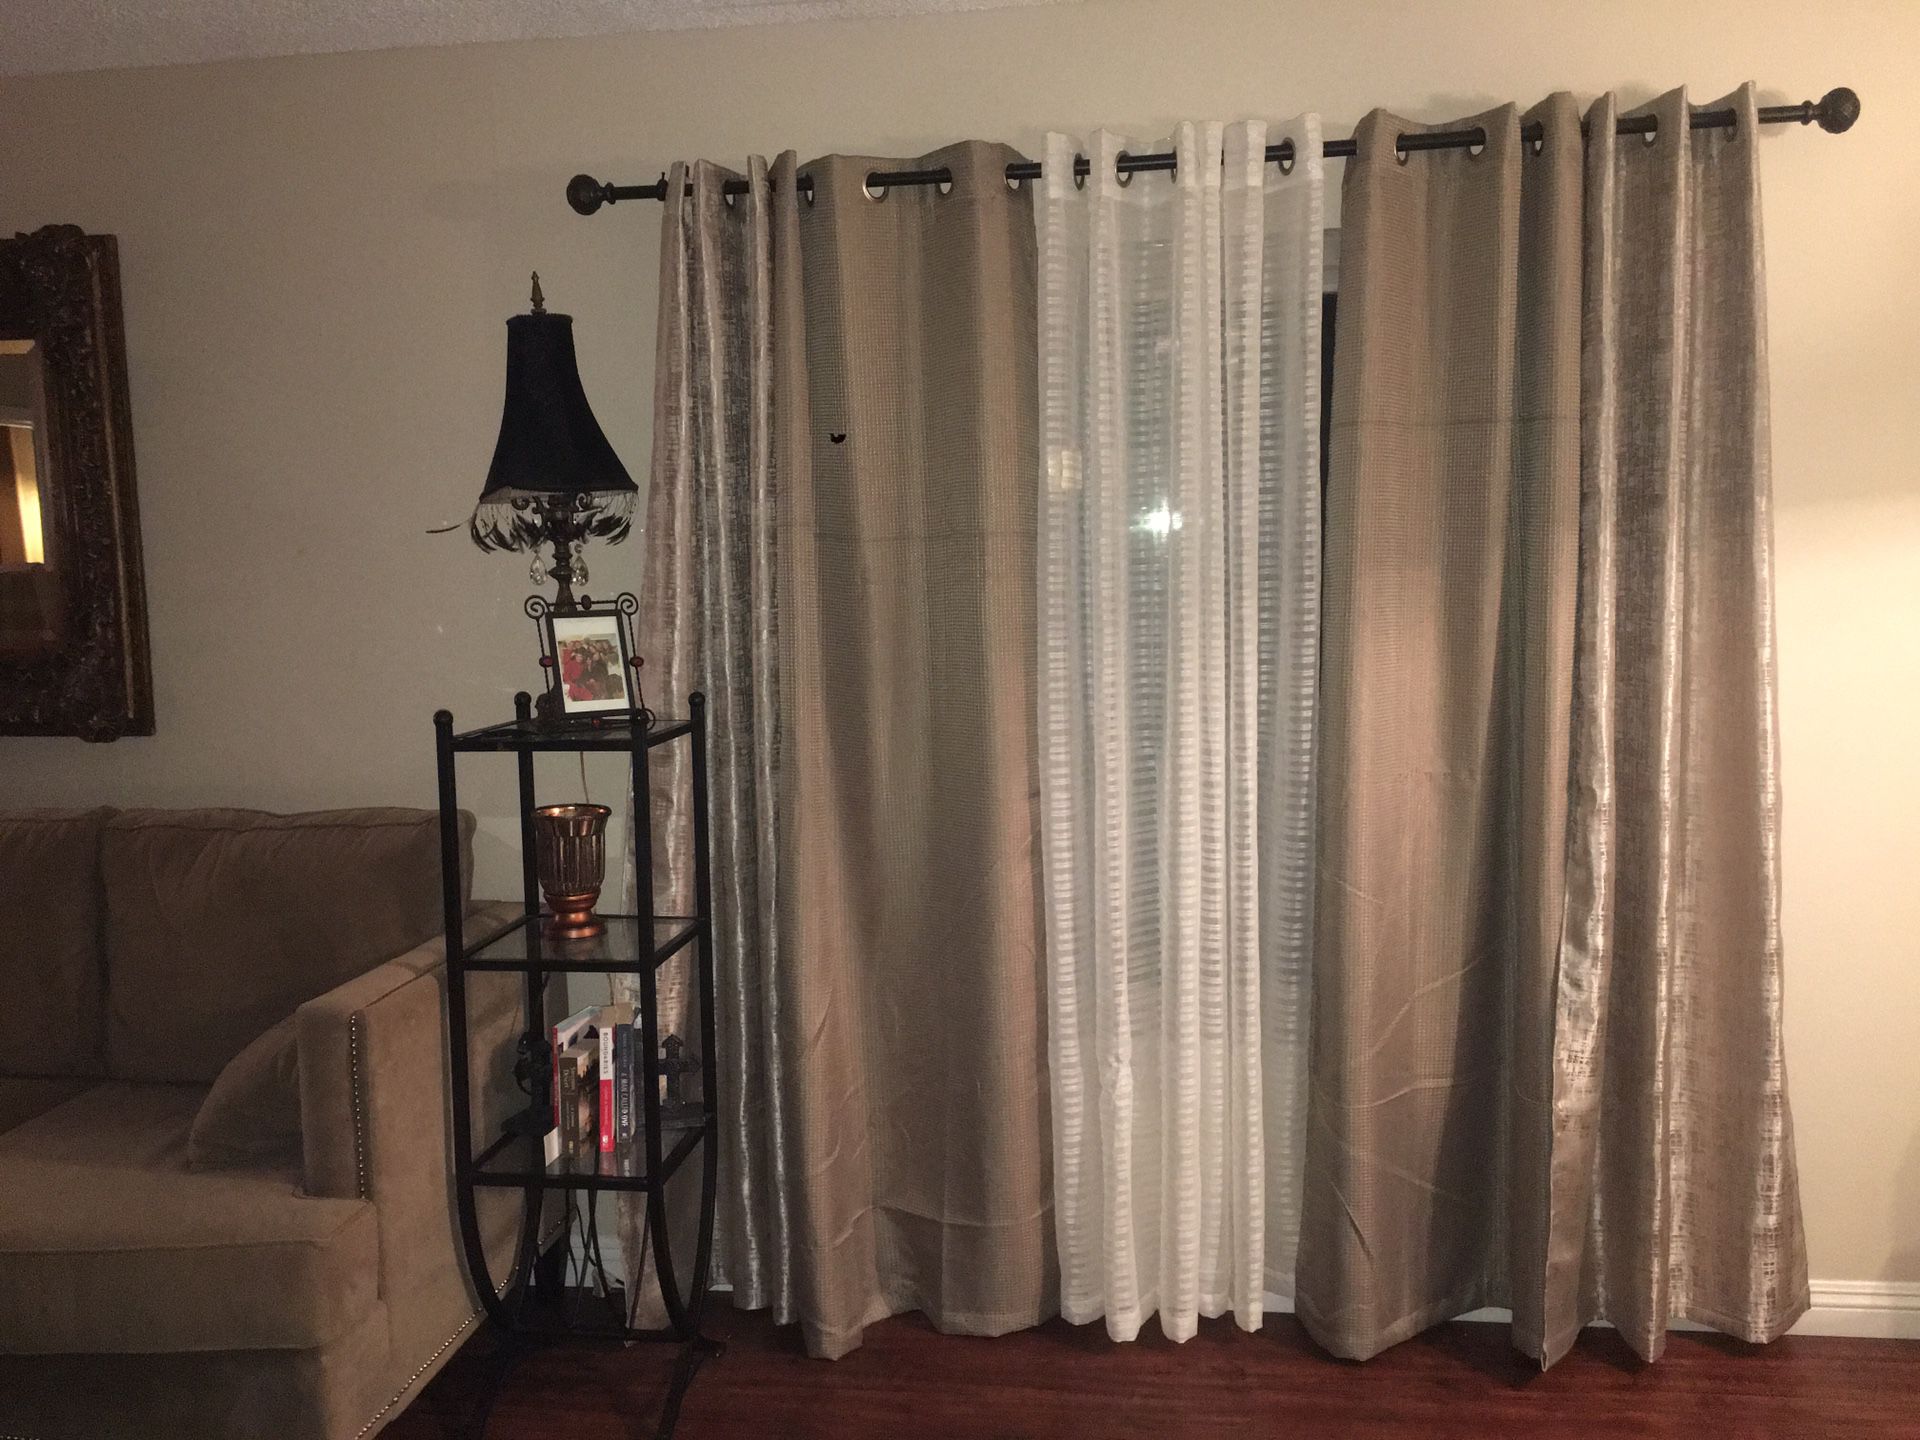 Curtain rod and curtains